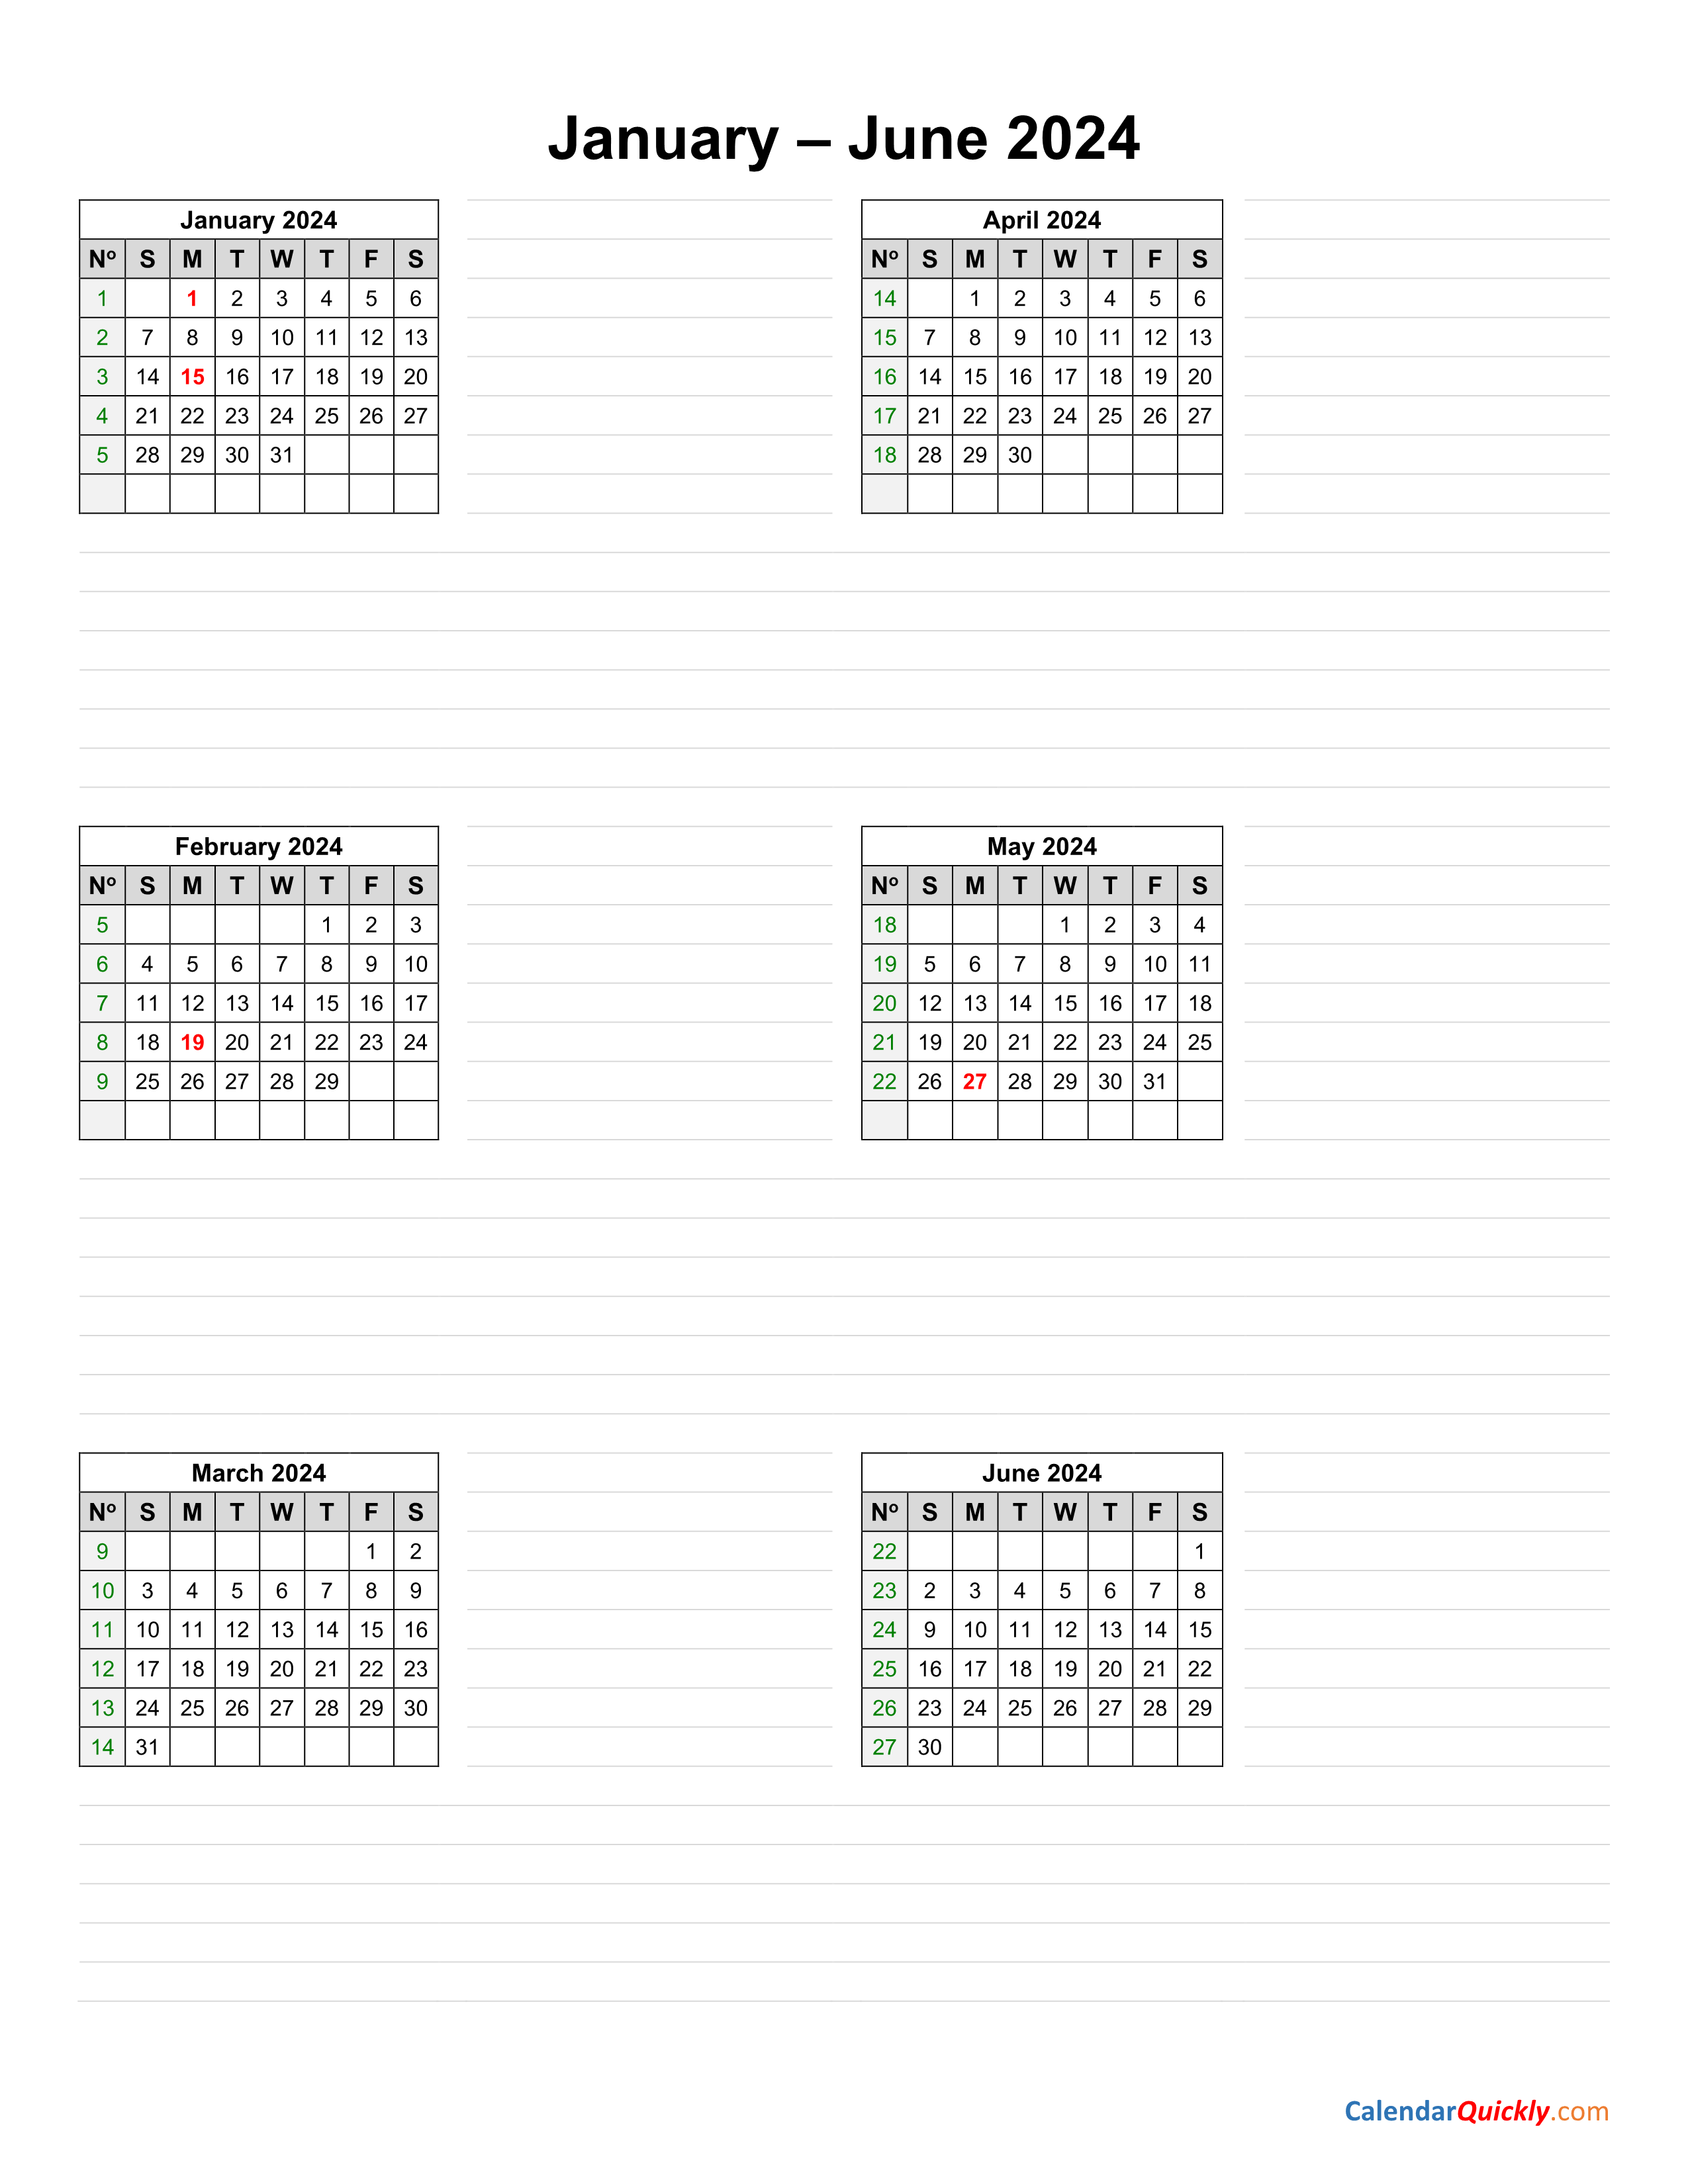 January To June 2024 Calendar Vertical | Calendar Quickly inside January 2024 To June 2024 Calendar Printable